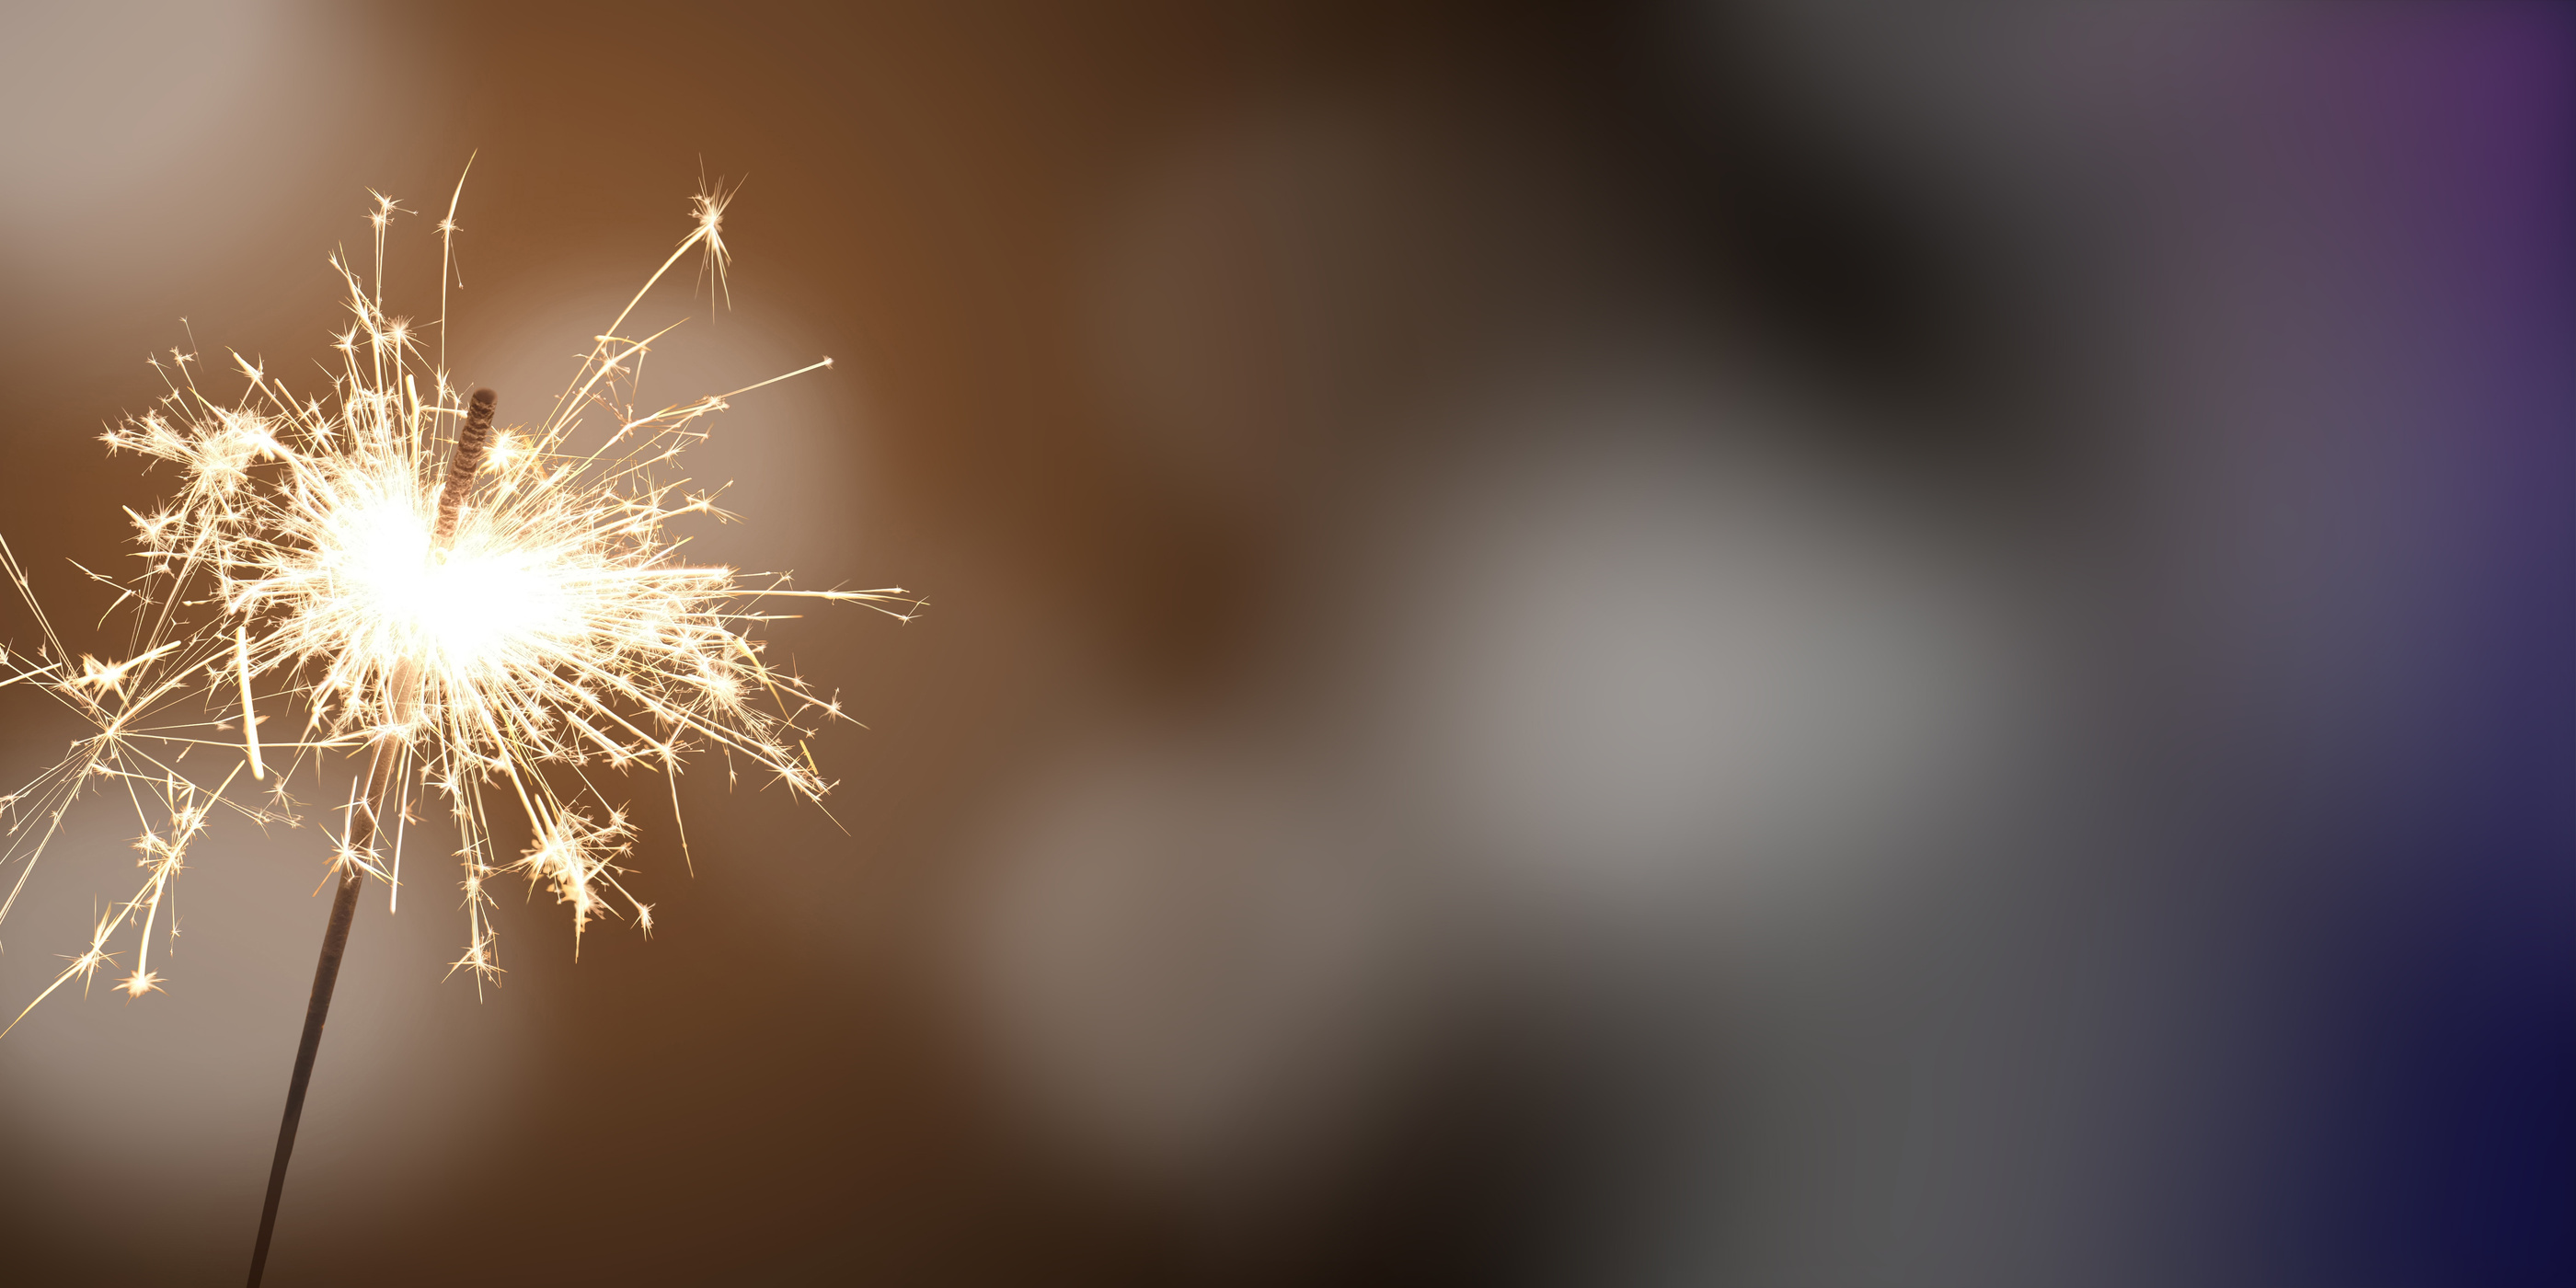 sparkler - New Year / New Year's Eve / celebration